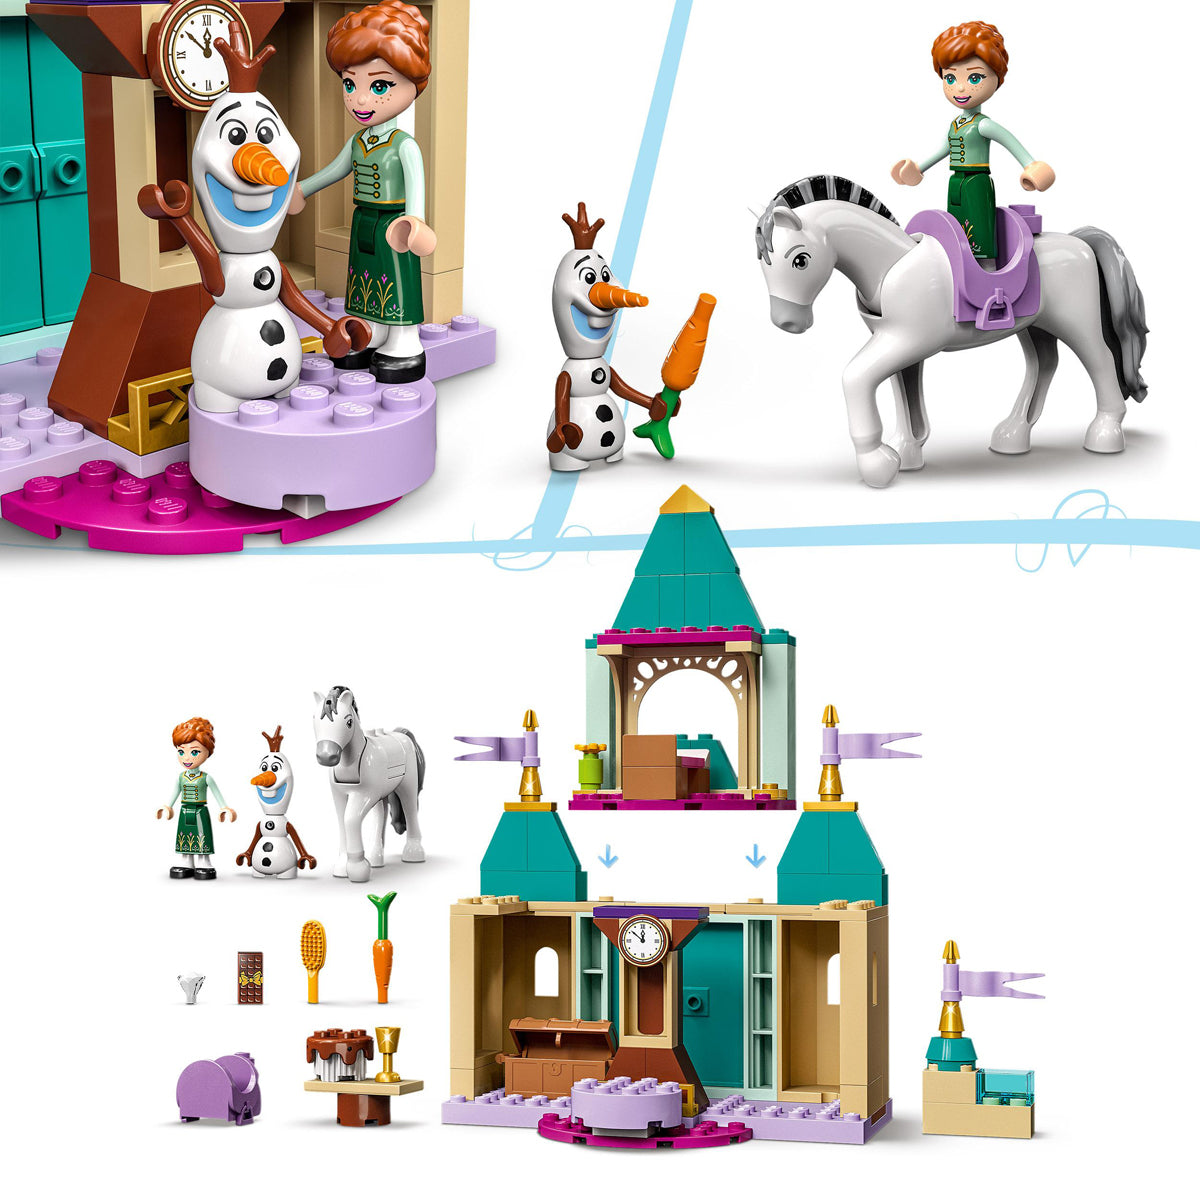 LEGO Disney Princess - Anna and Olaf's Castle Fun 43204